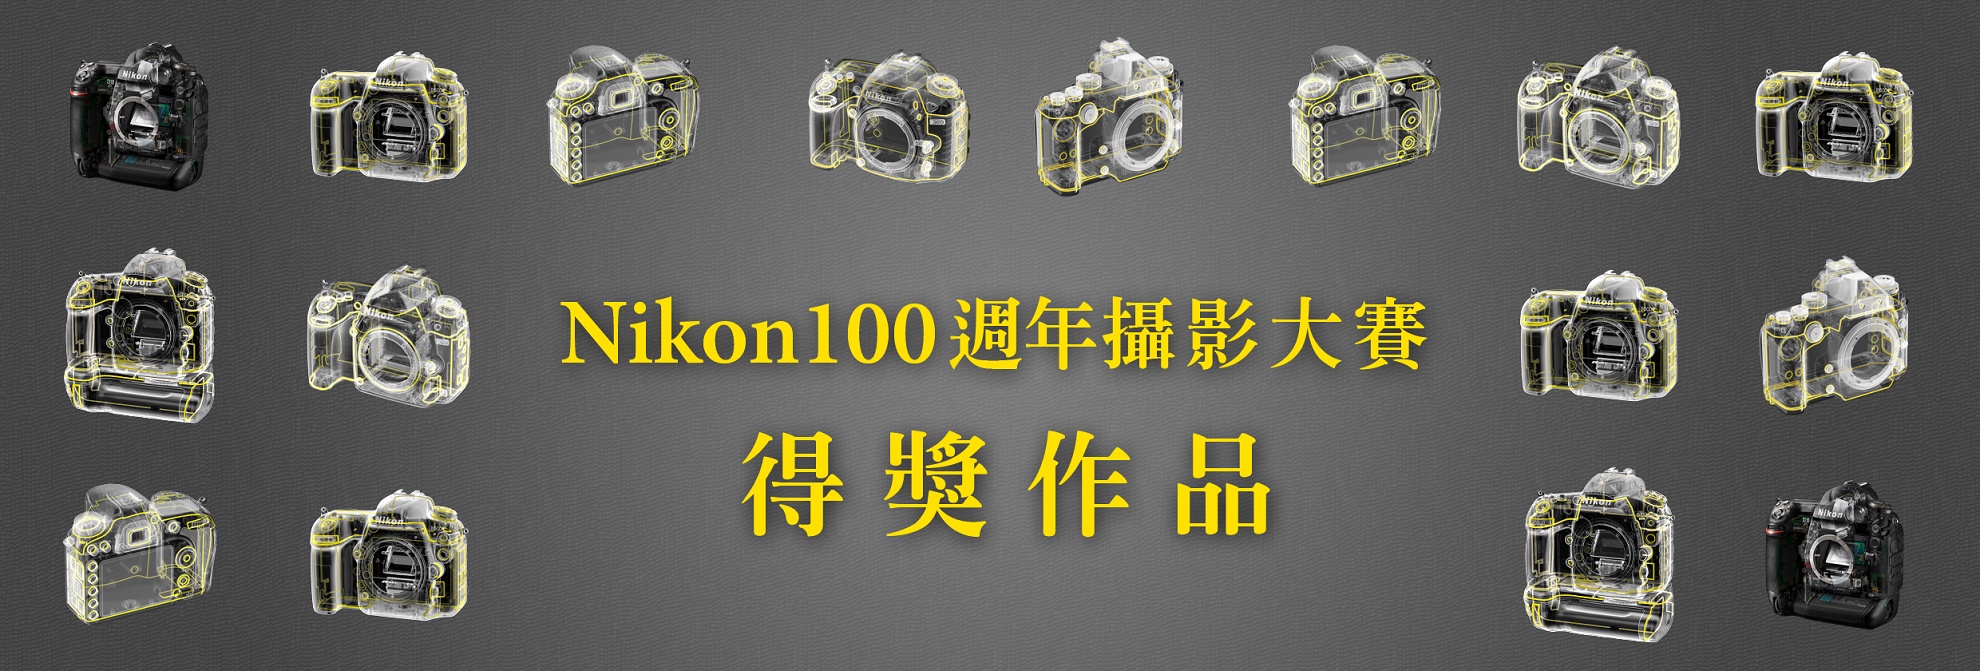 Nikon 100週年攝影大賽 得獎作品